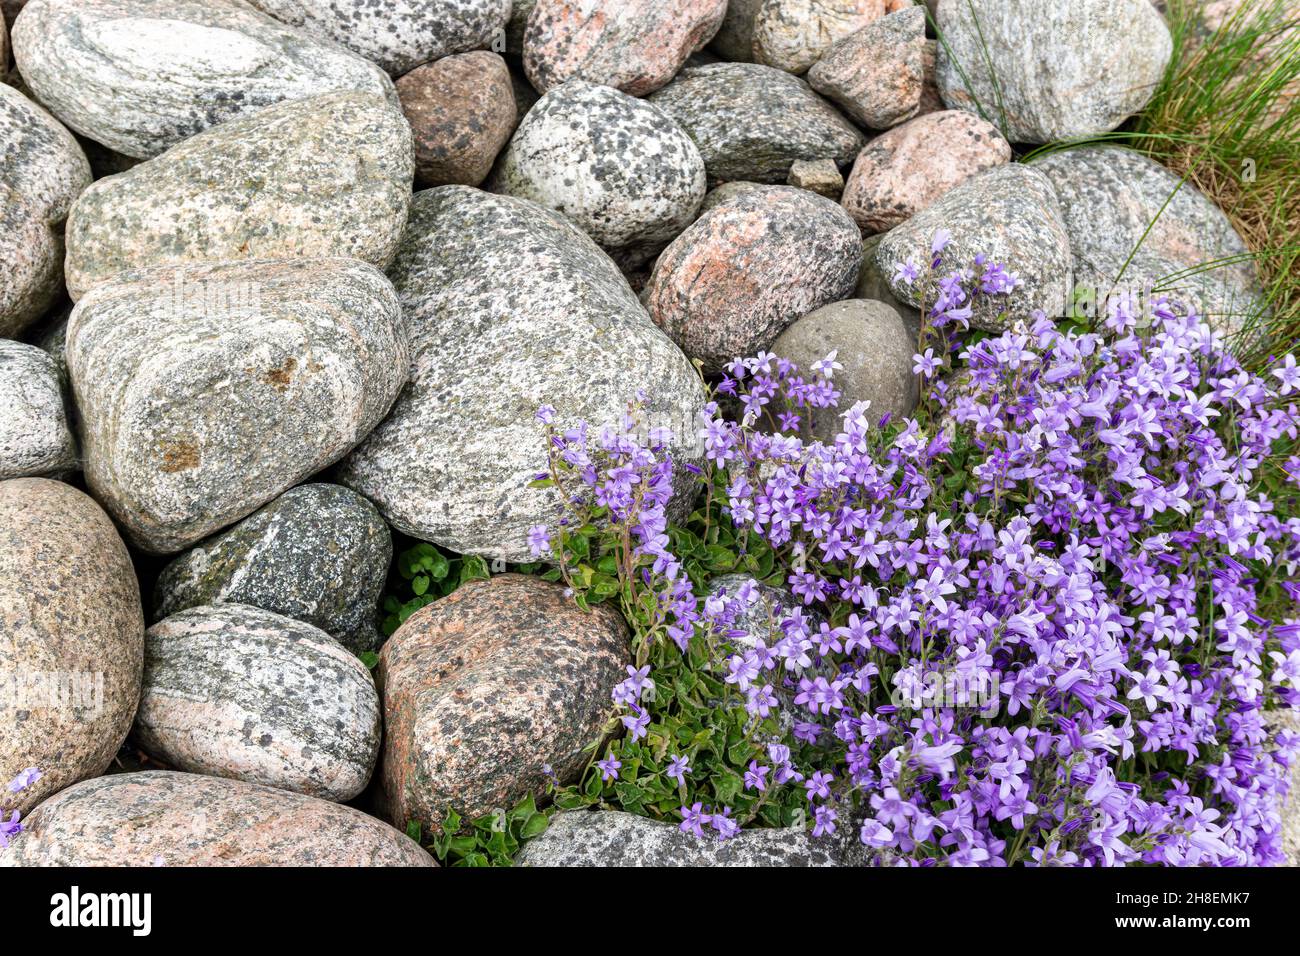 Smögen, Sweden -June 10, 2021: Close up view on typical vegetation on islands on West coast of Sweden Stock Photo